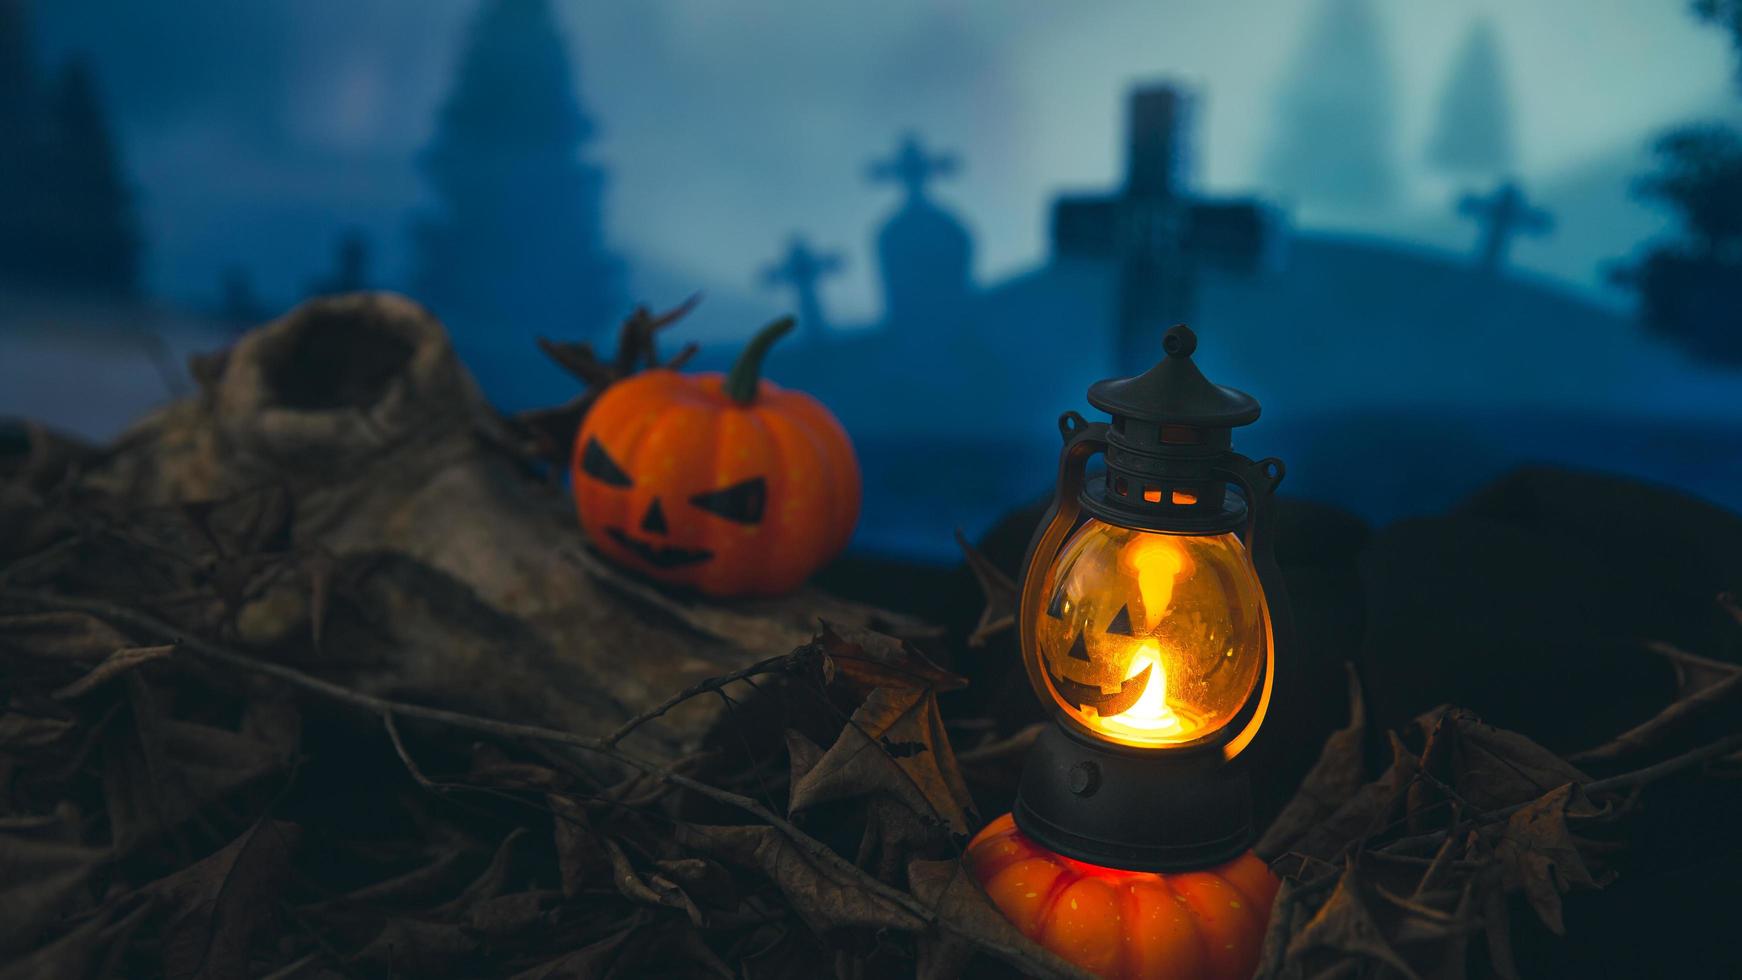 Spooky cemetery with glow halloween pumpkin photo